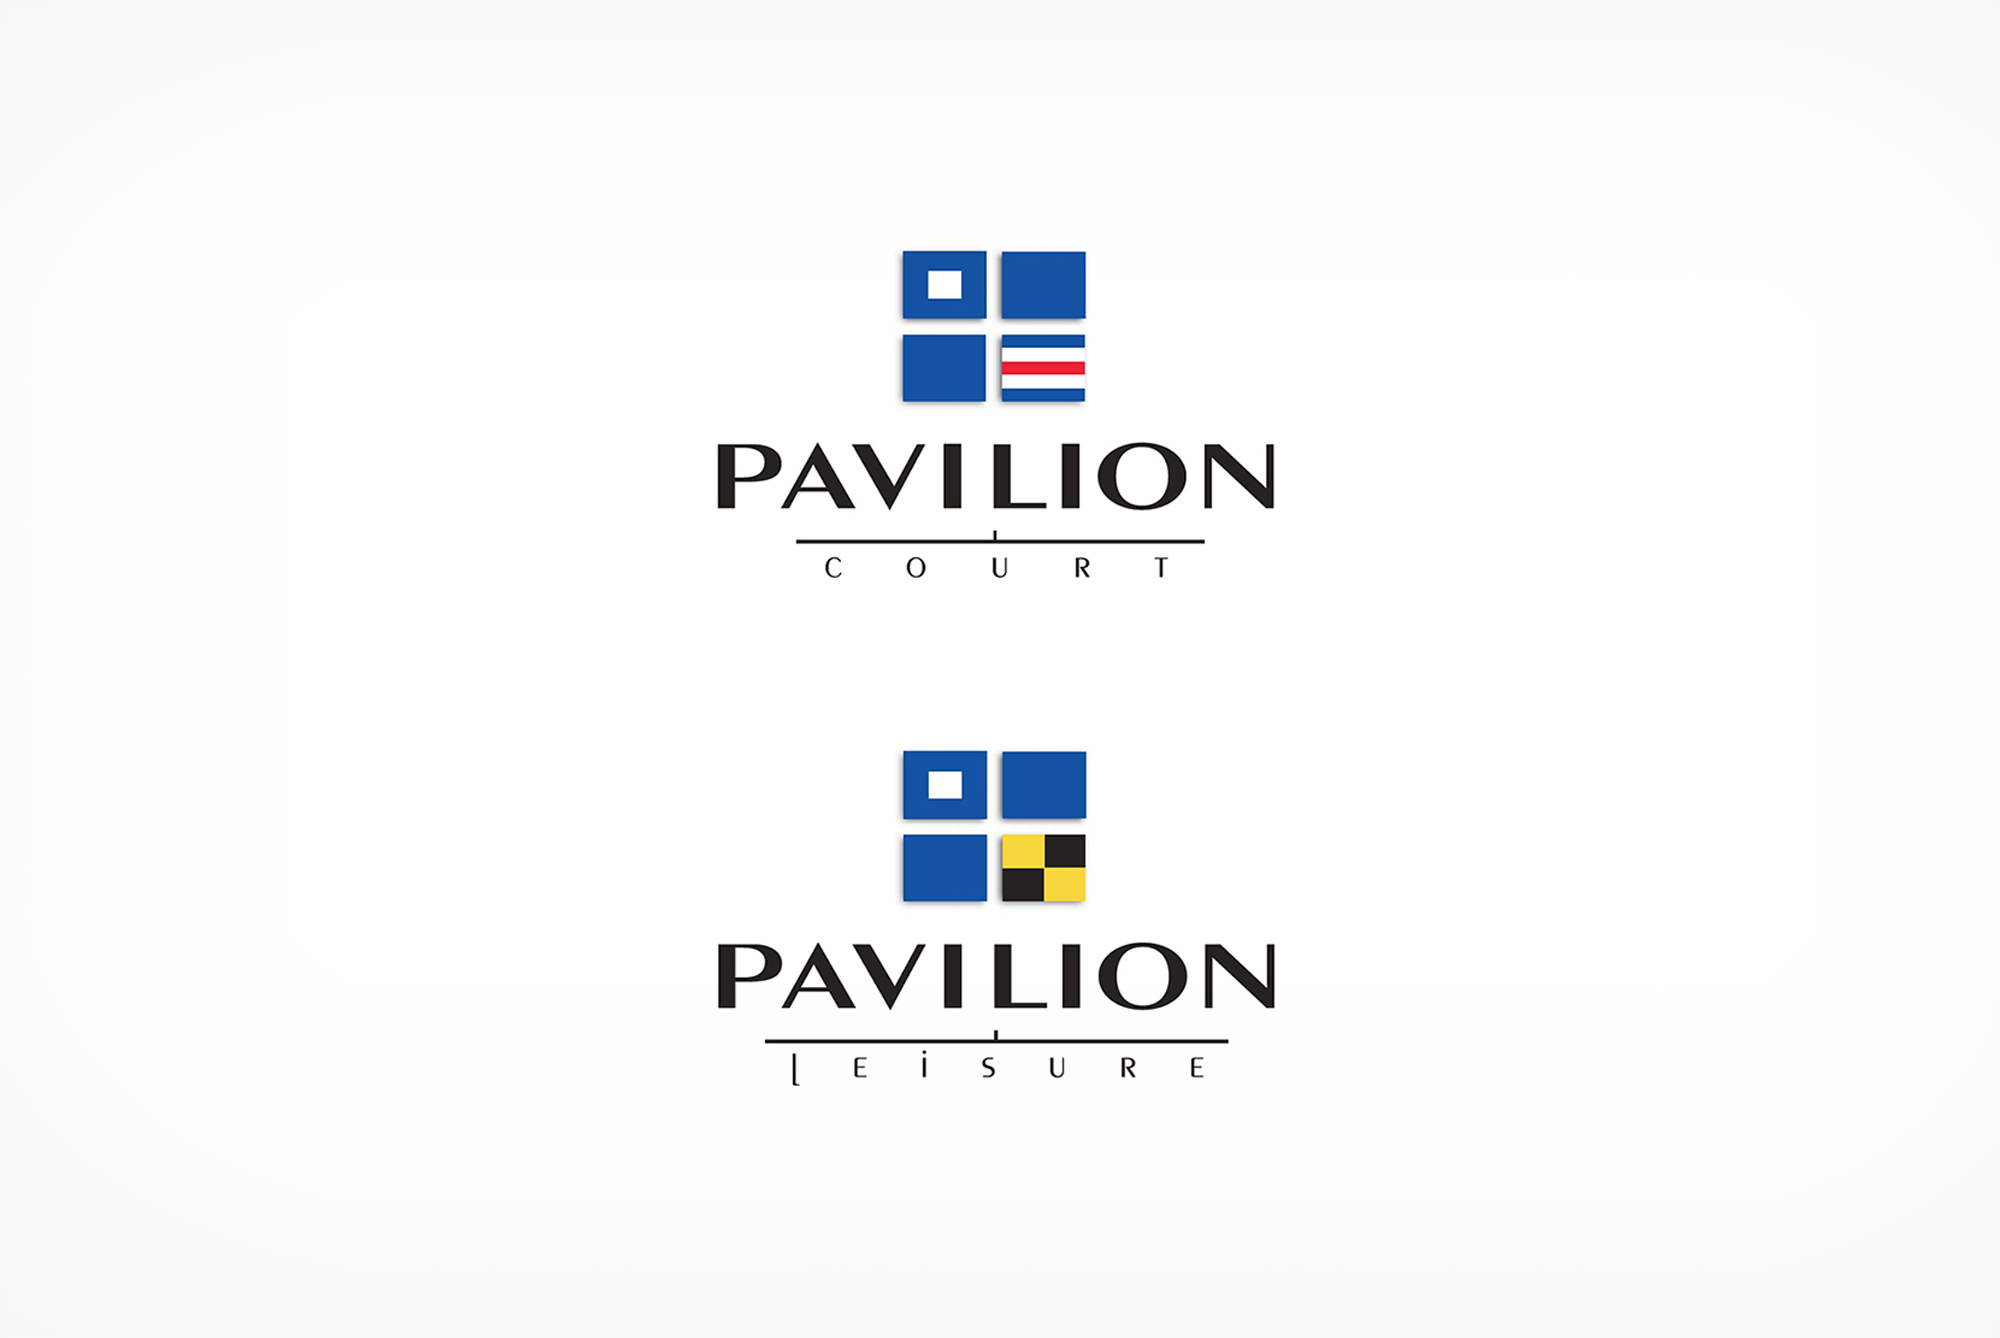 A Dublin, Ireland based property developers secondary brand logos.